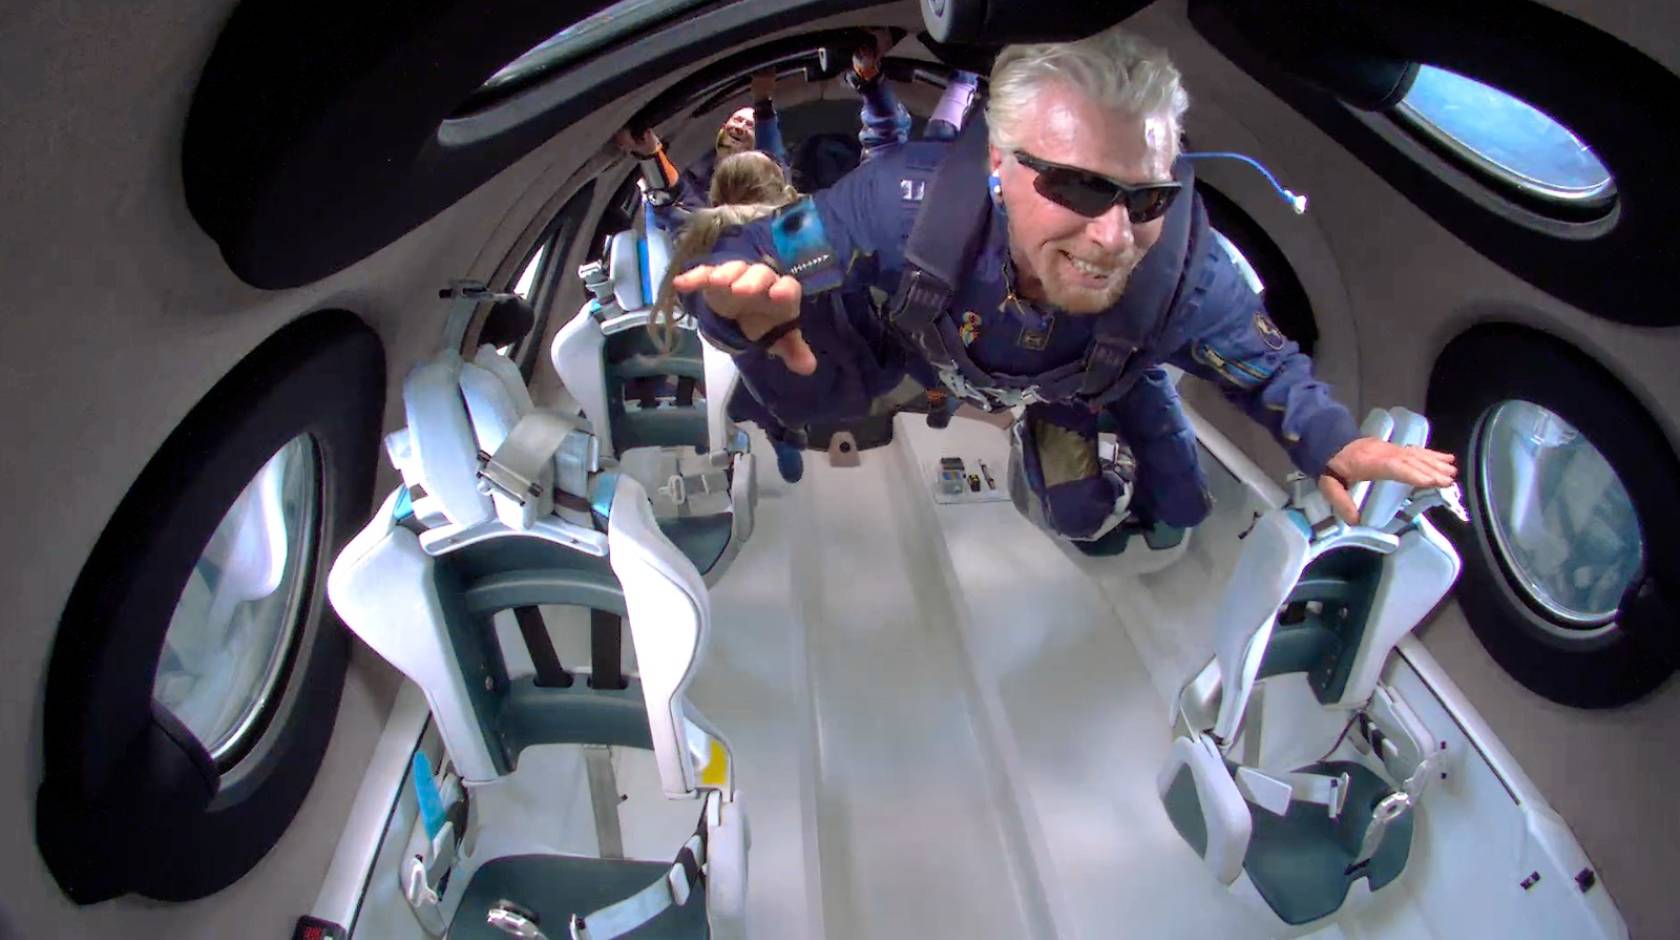 Sir Richard Branson is weightless in space on his Virgin Galactic passenger rocket plane.